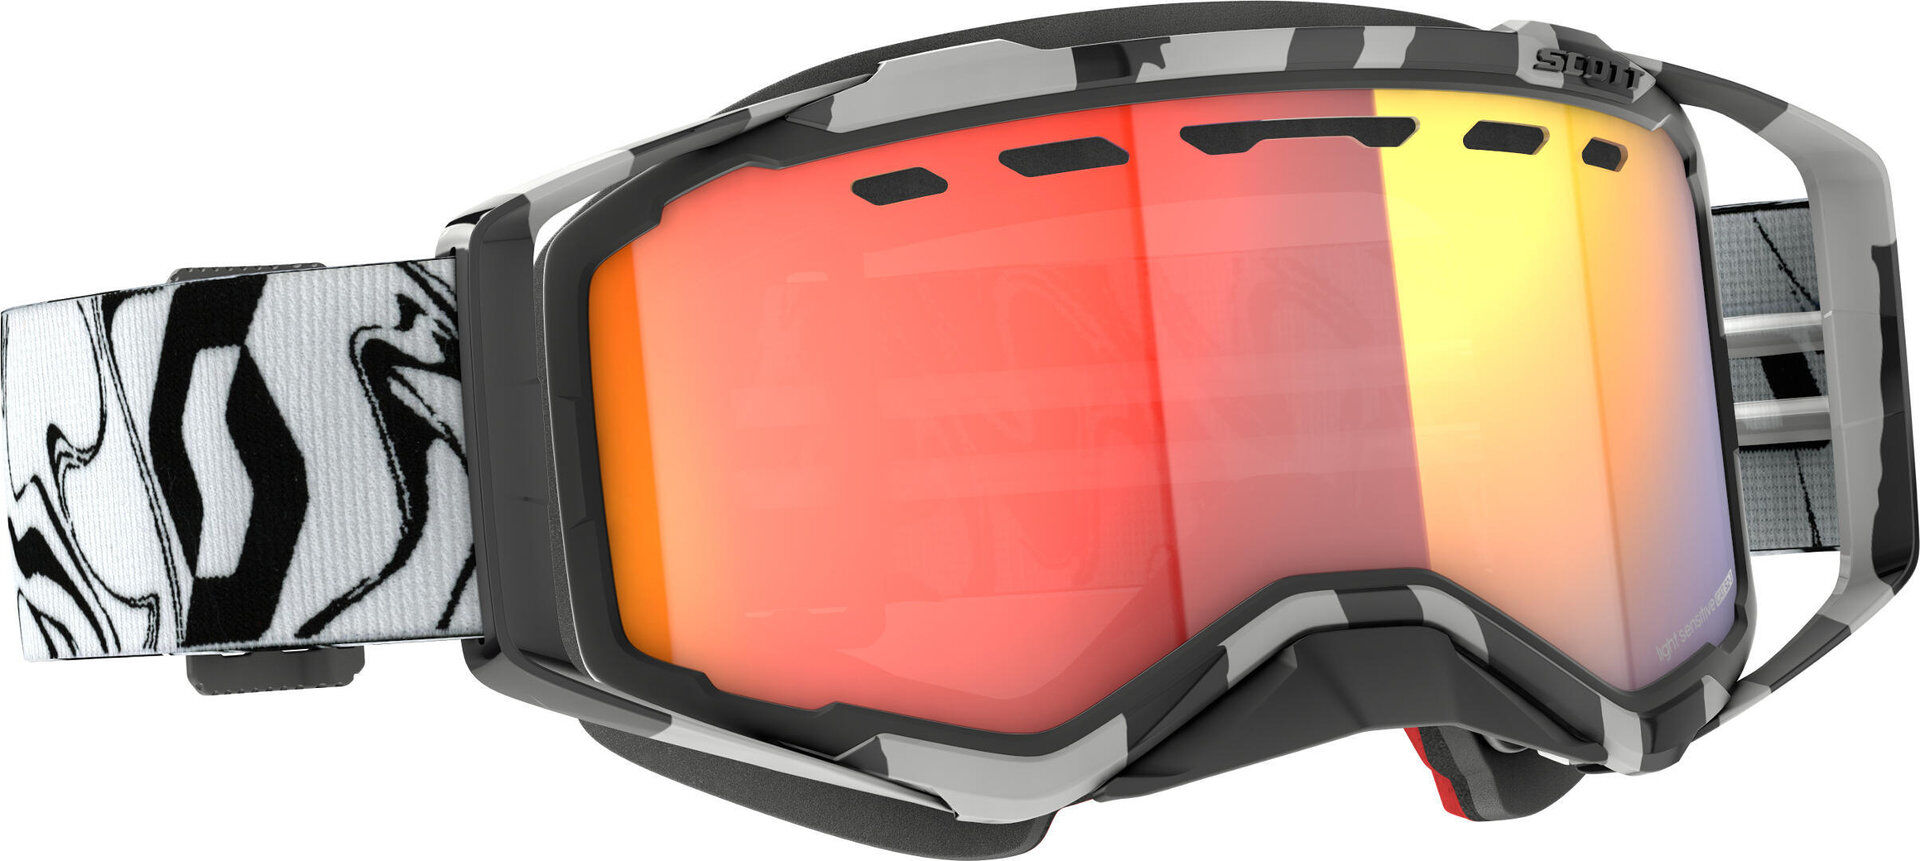 Scott Prospect Light Sensitive Gafas de nieve blancas y negras - Rojo (un tamaño)